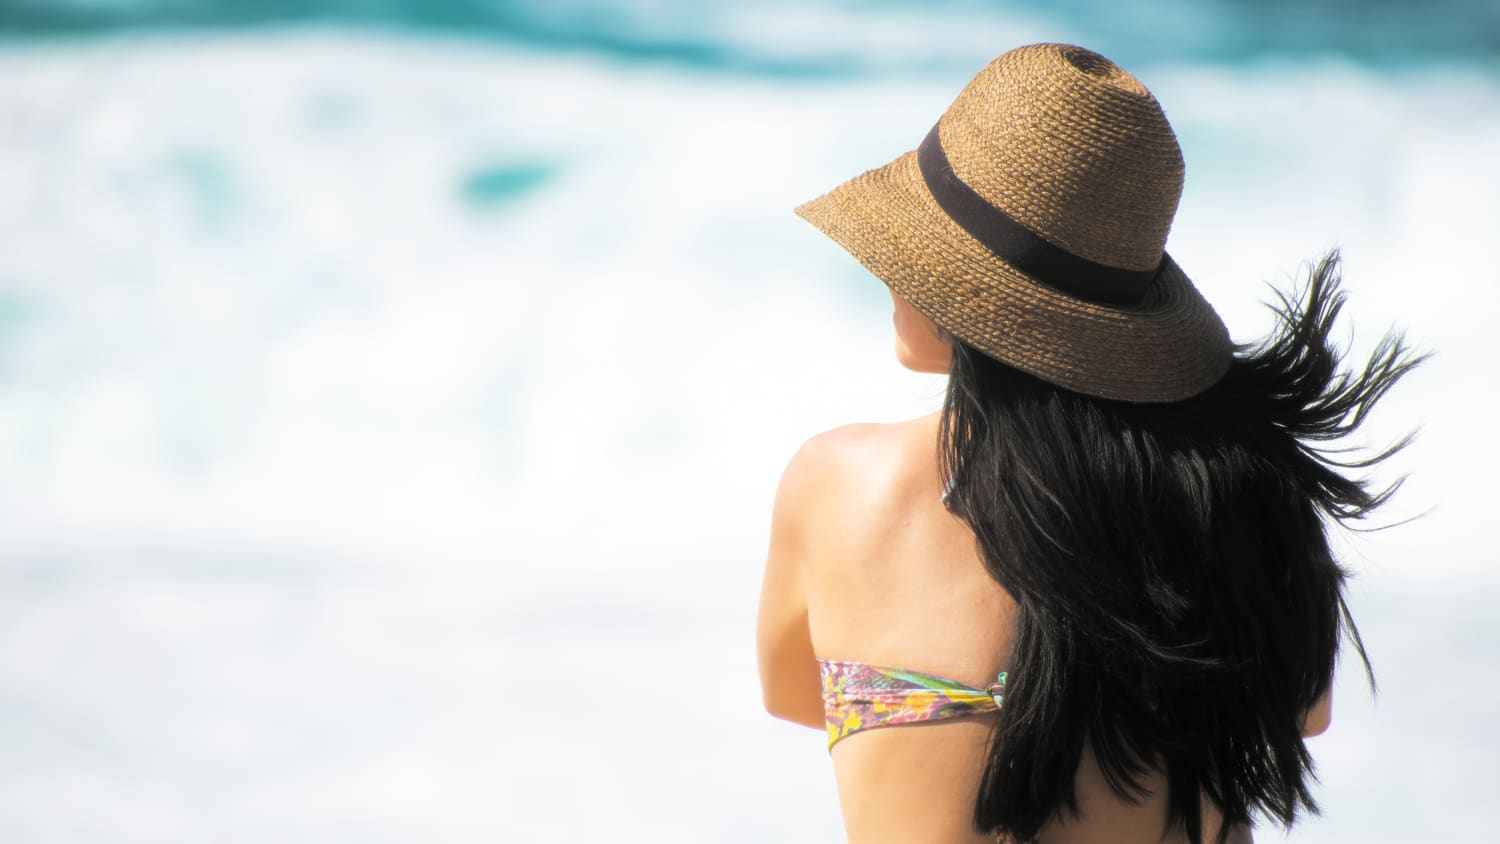 Woman on beach with long dark hair wearing hat.